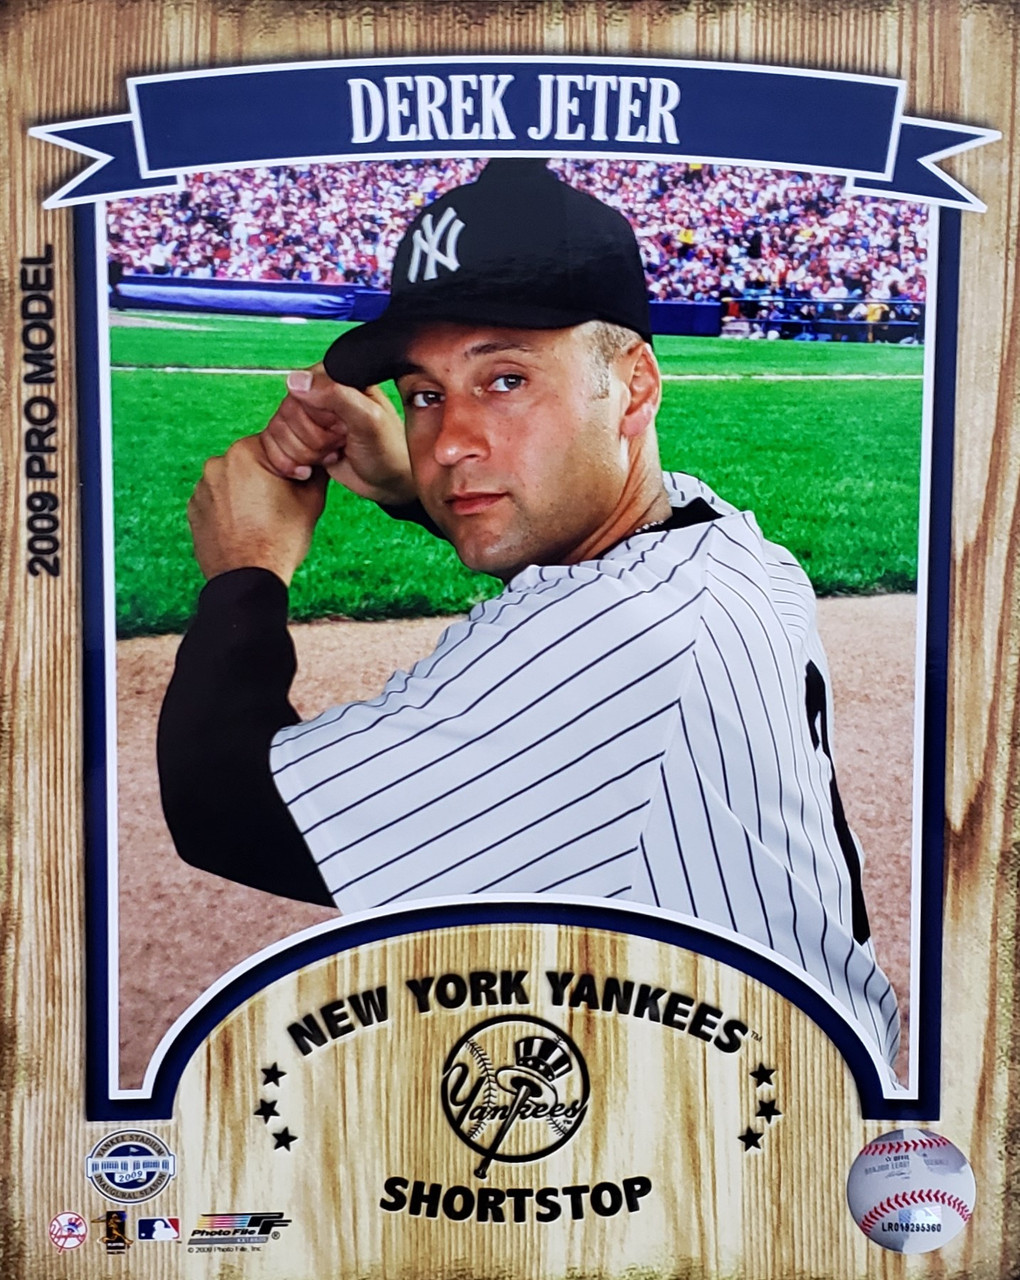 New York Yankees - Derek Jeter MLB Baseball Card Photo - 8 x 10